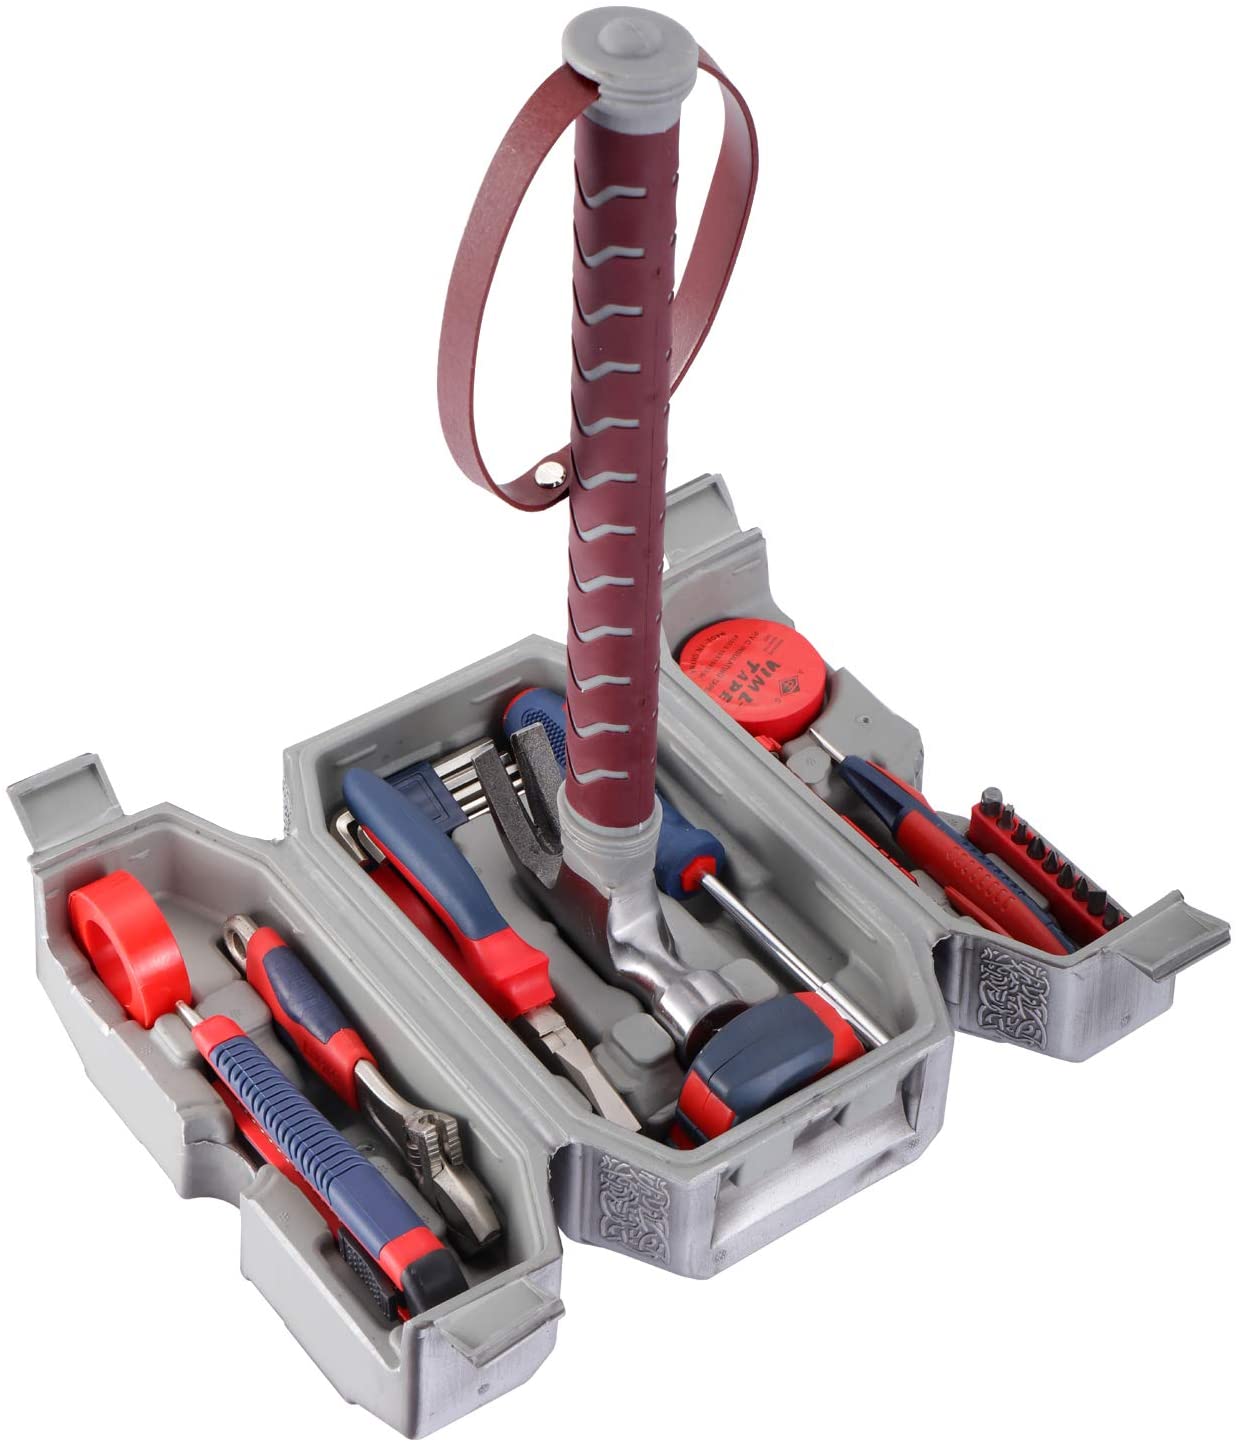 Thor Hammer toolkit set